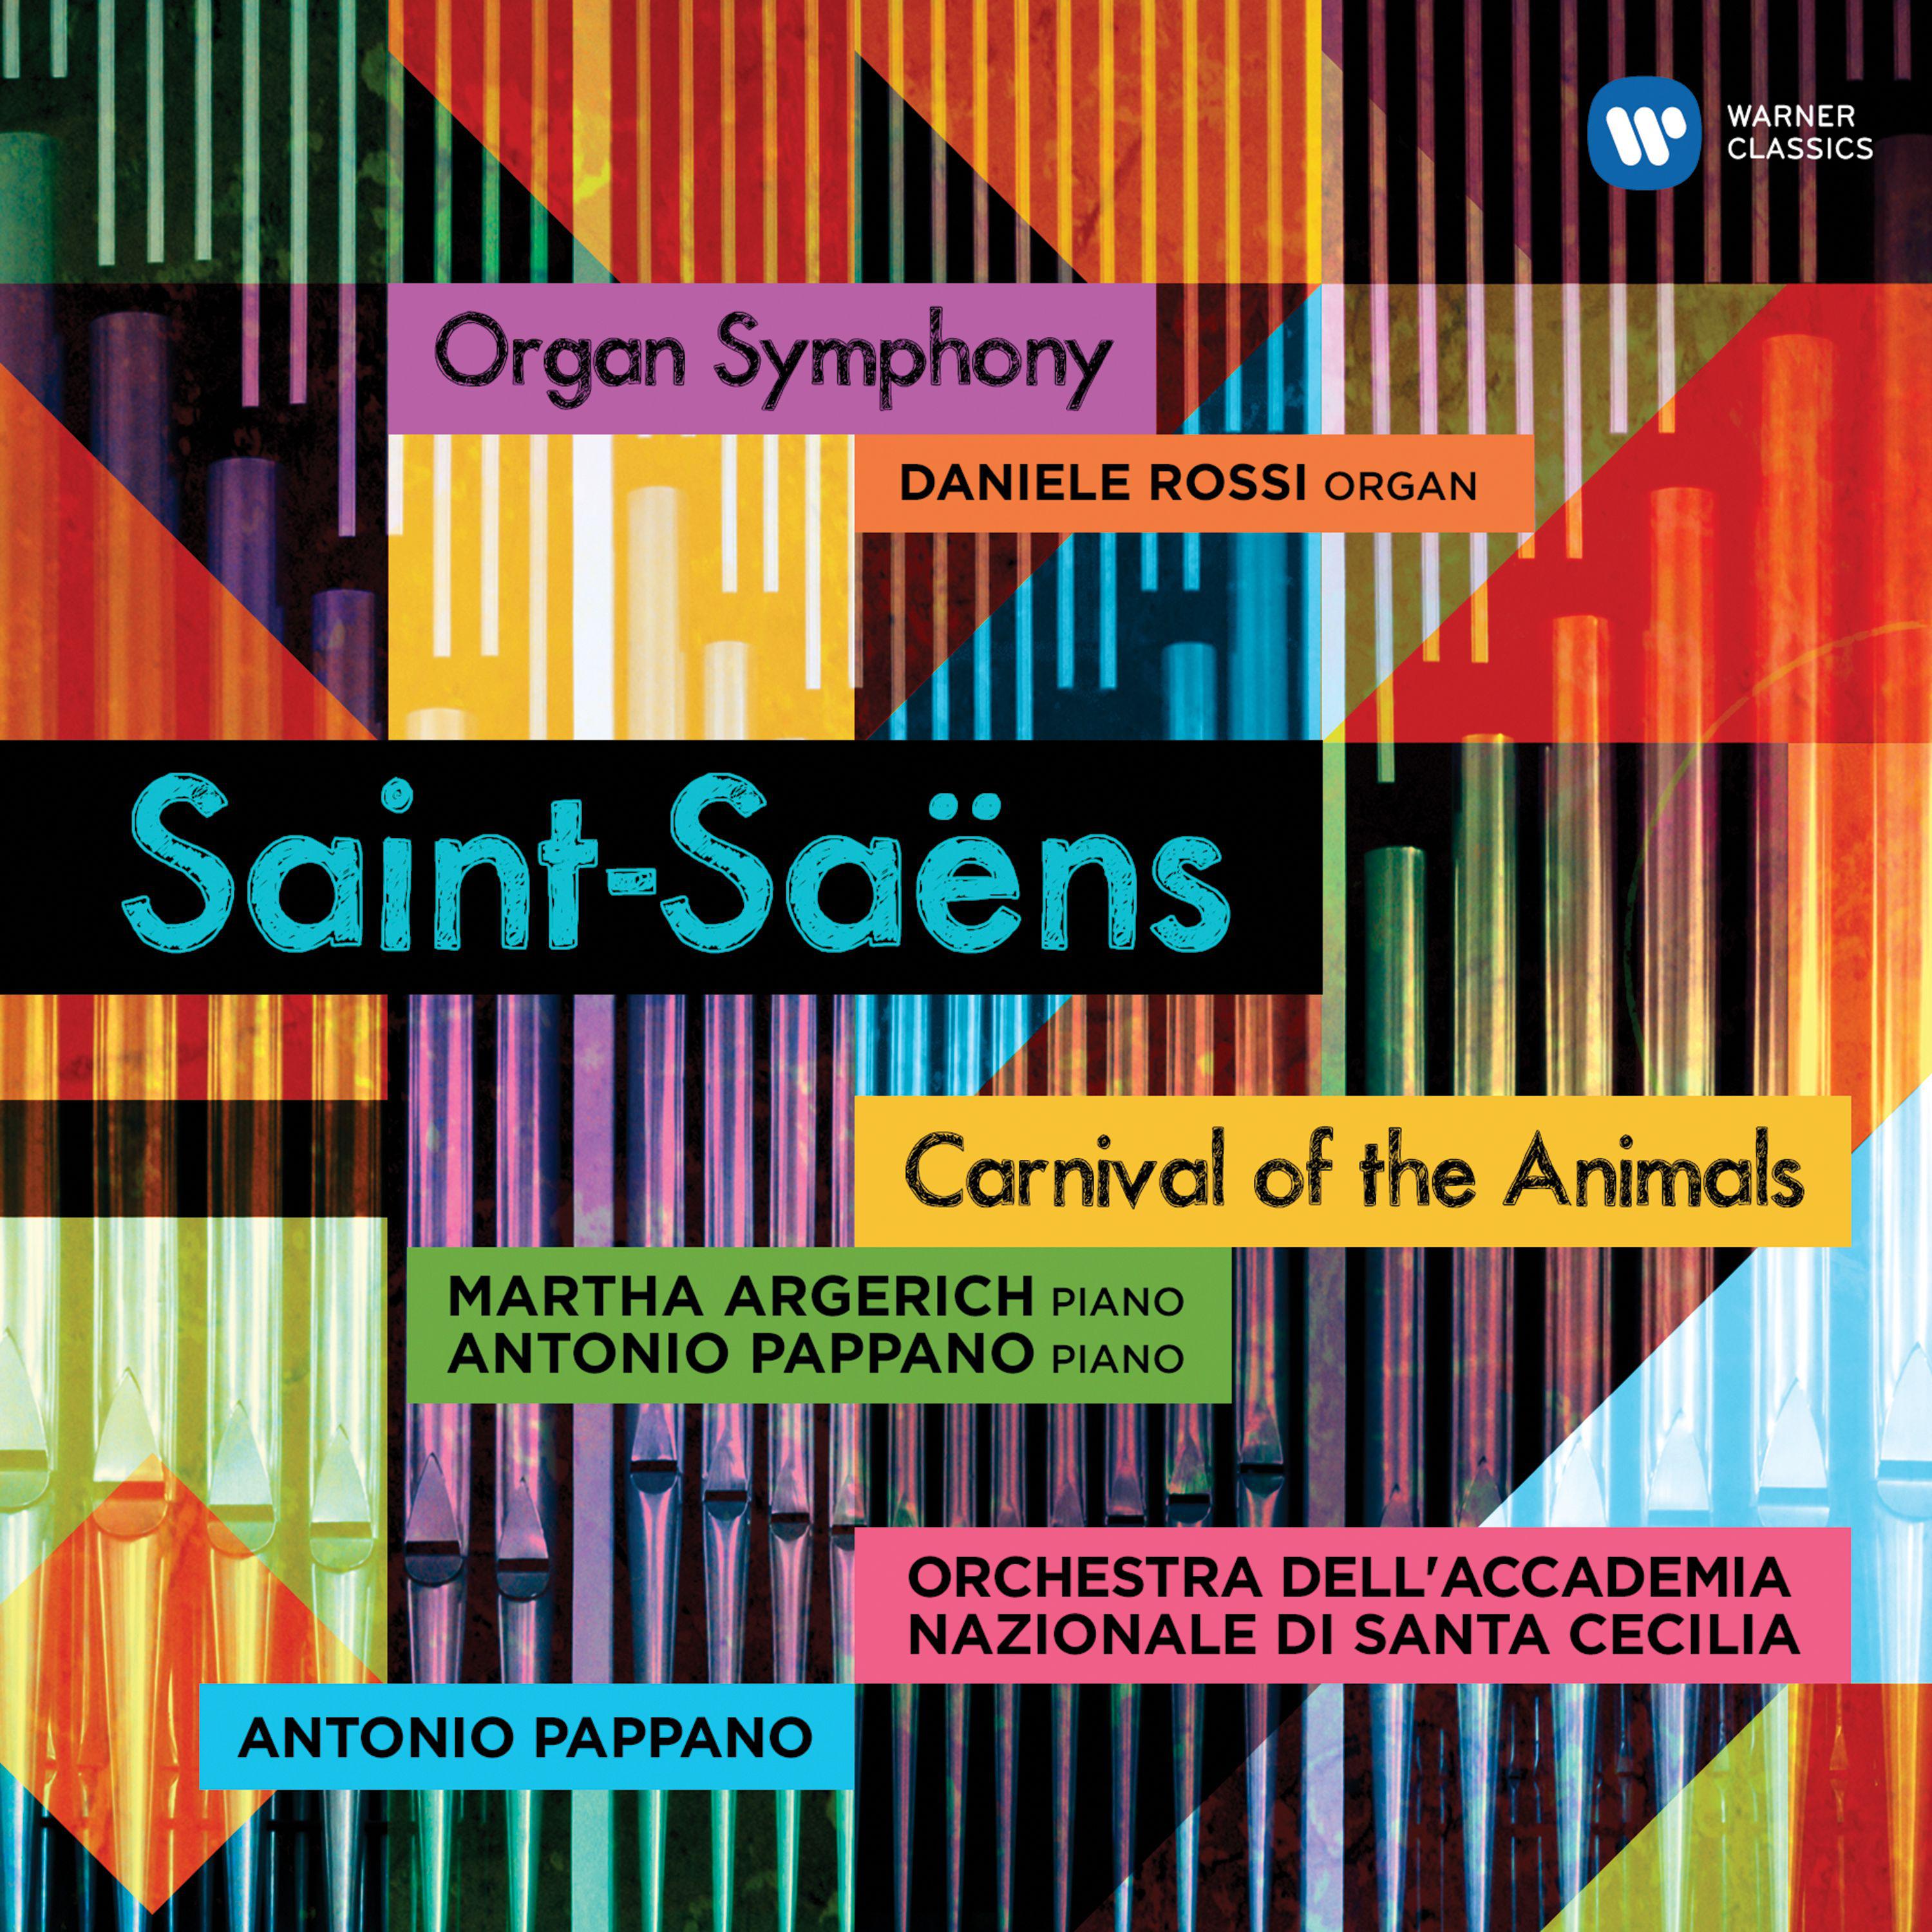 SaintSa ns: Carnival of the Animals  Symphony No. 3, " Organ Symphony"